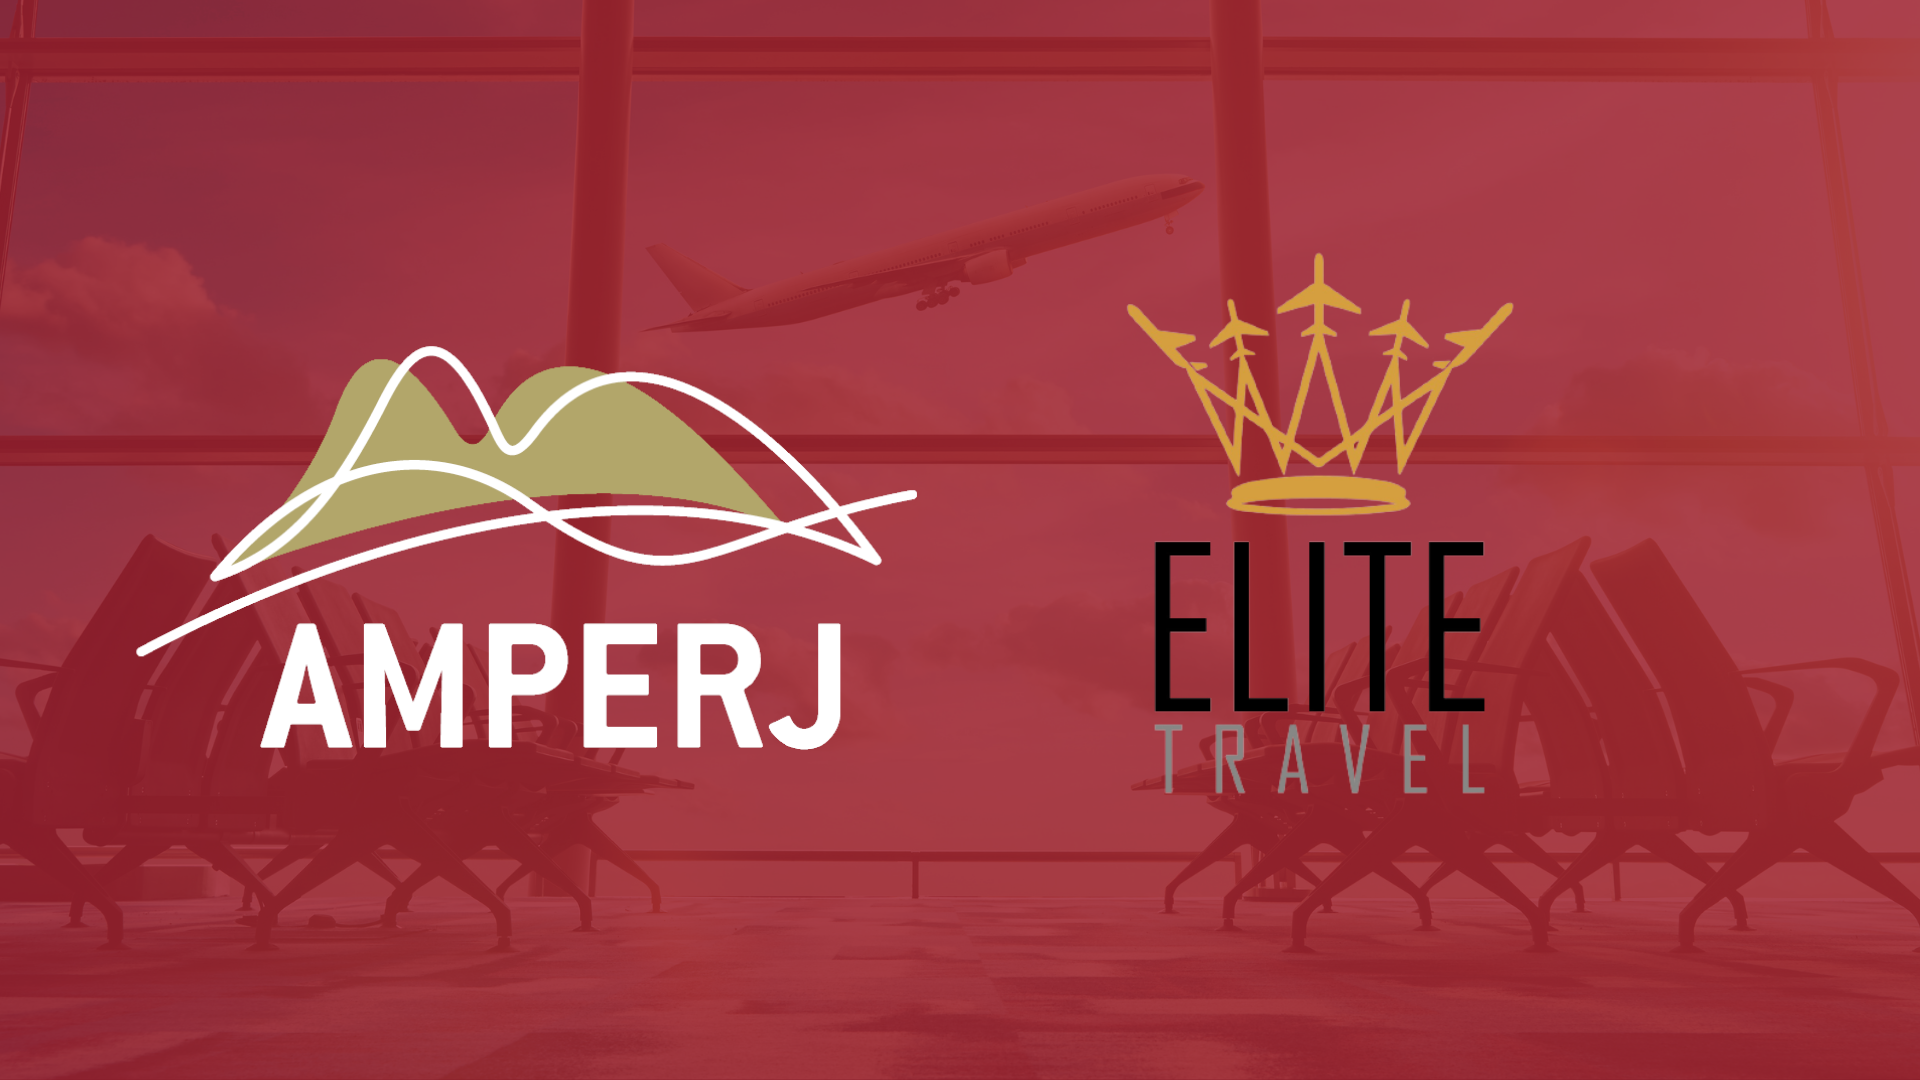 elite travel paradise